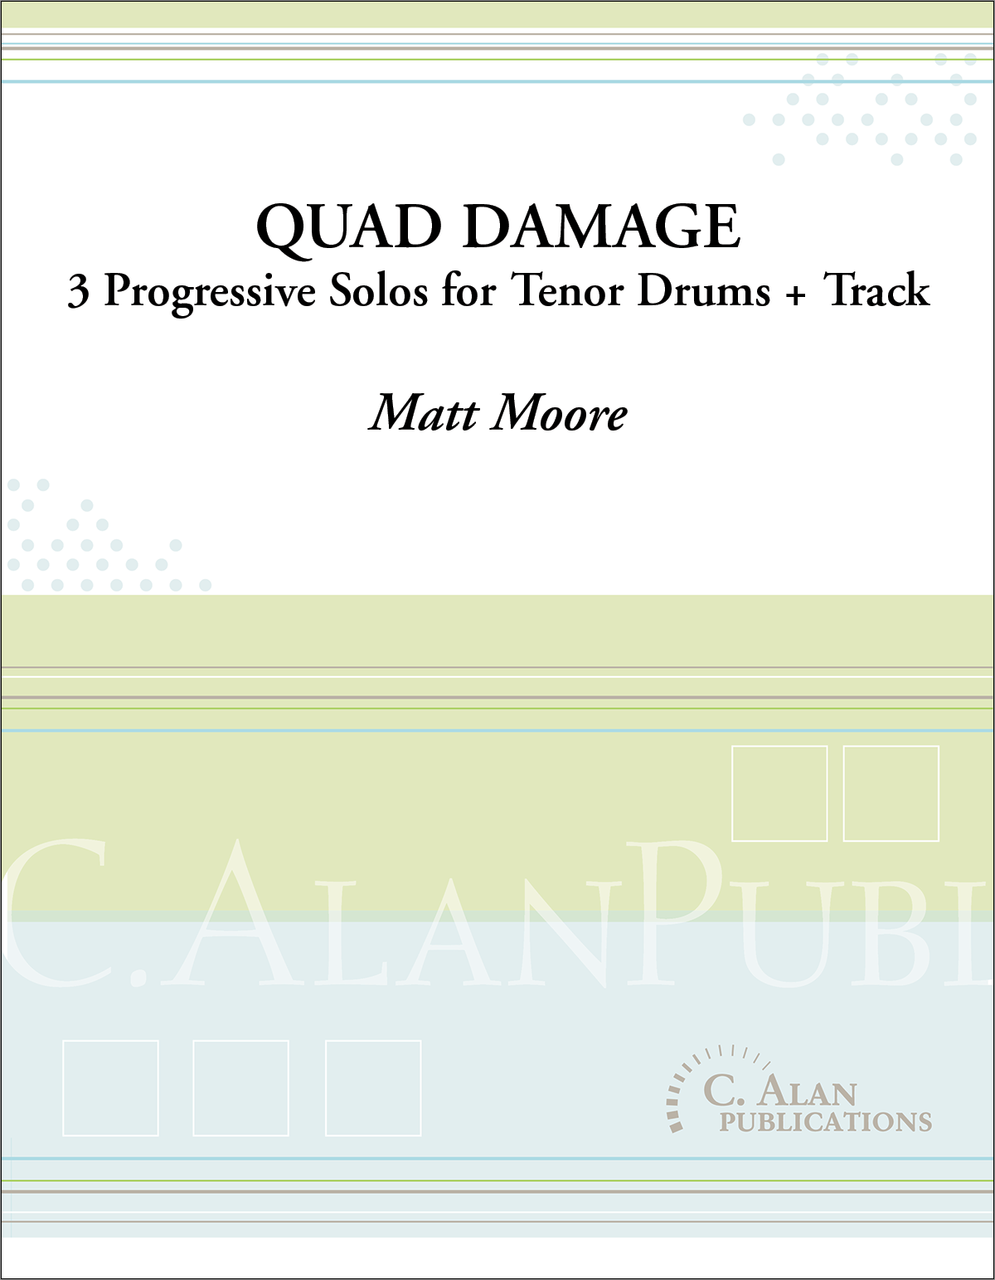 Quad Damage by Matthew Moore